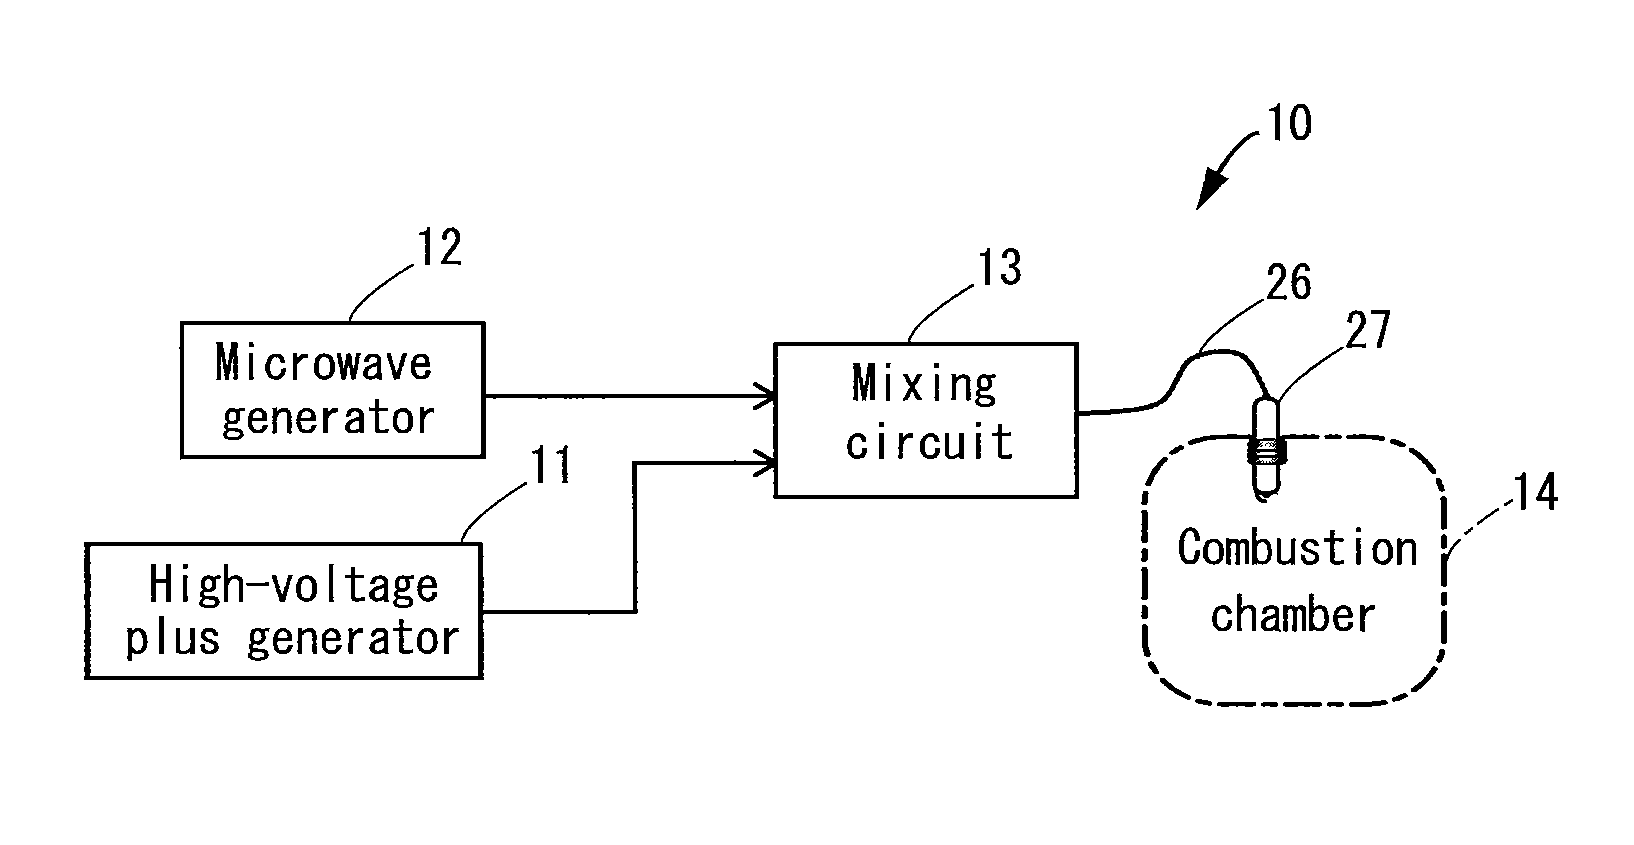 Ignition or plasma generation apparatus